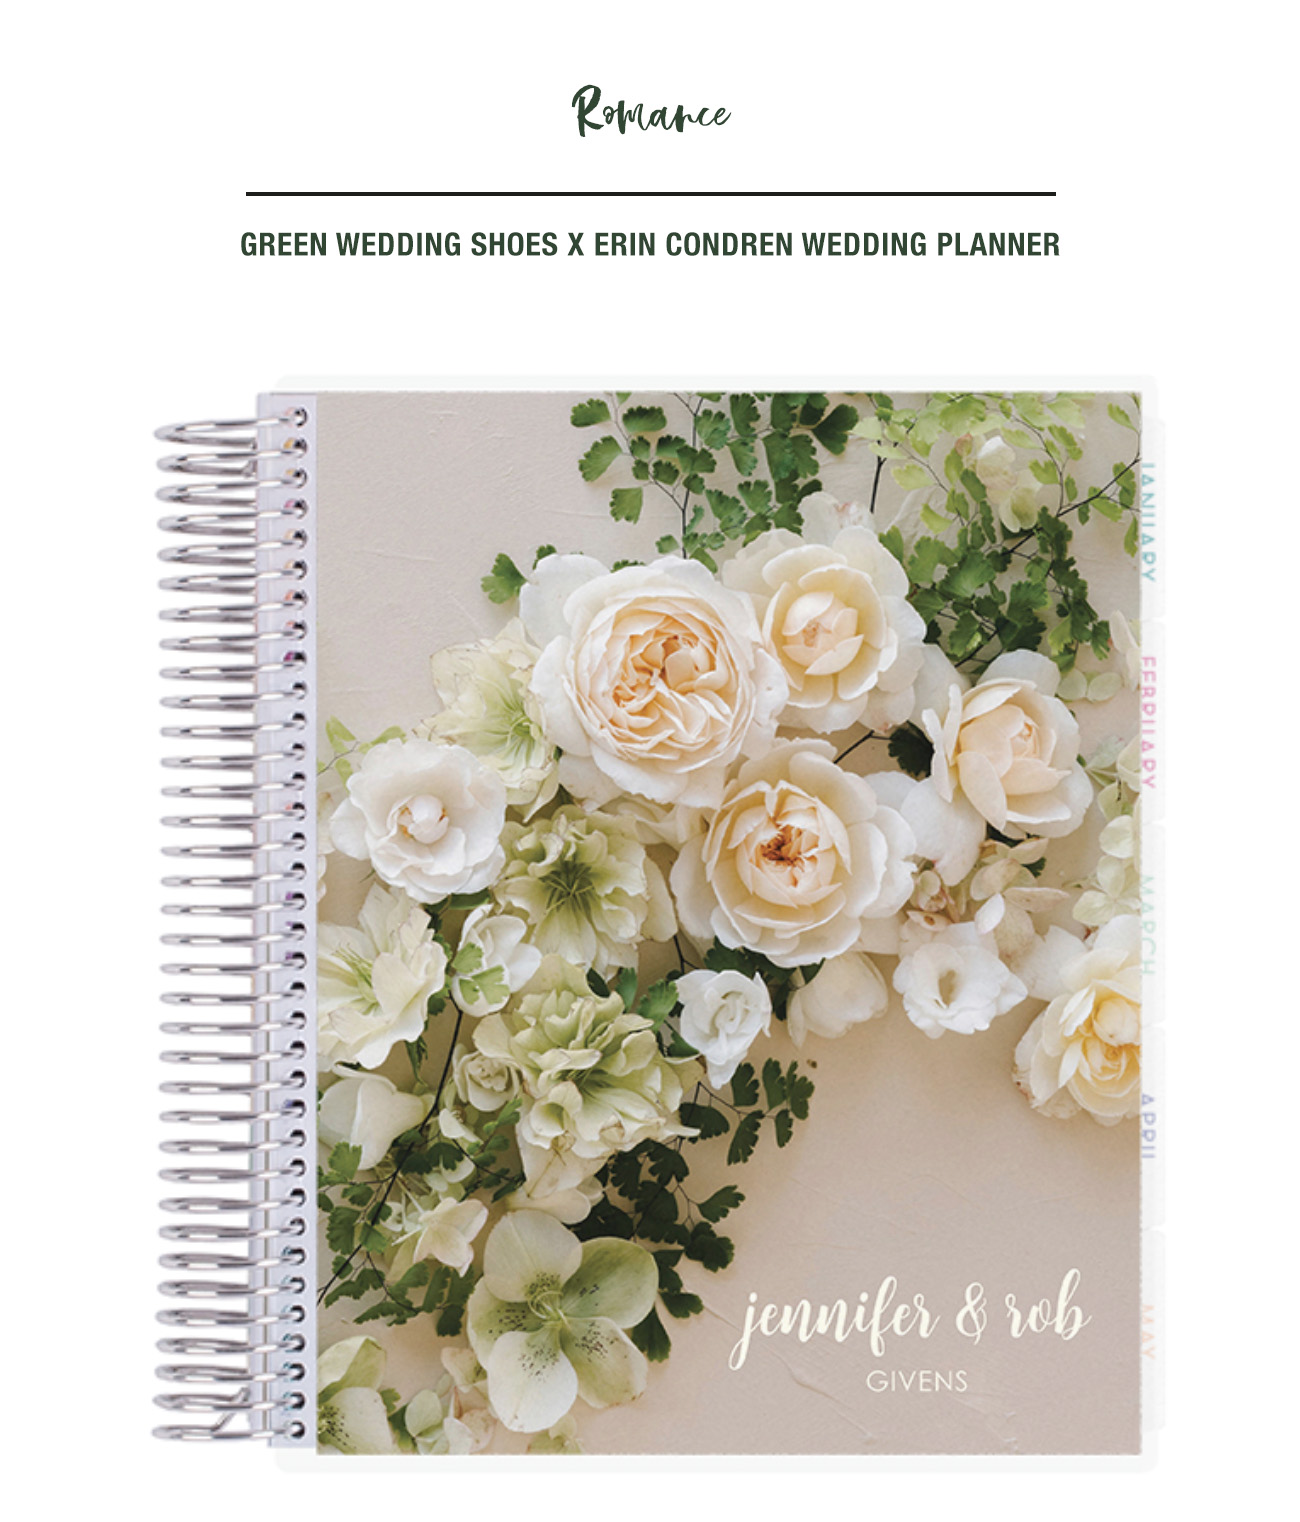 Green Wedding Shoes x Erin Condren Wedding Planner Romance Cover